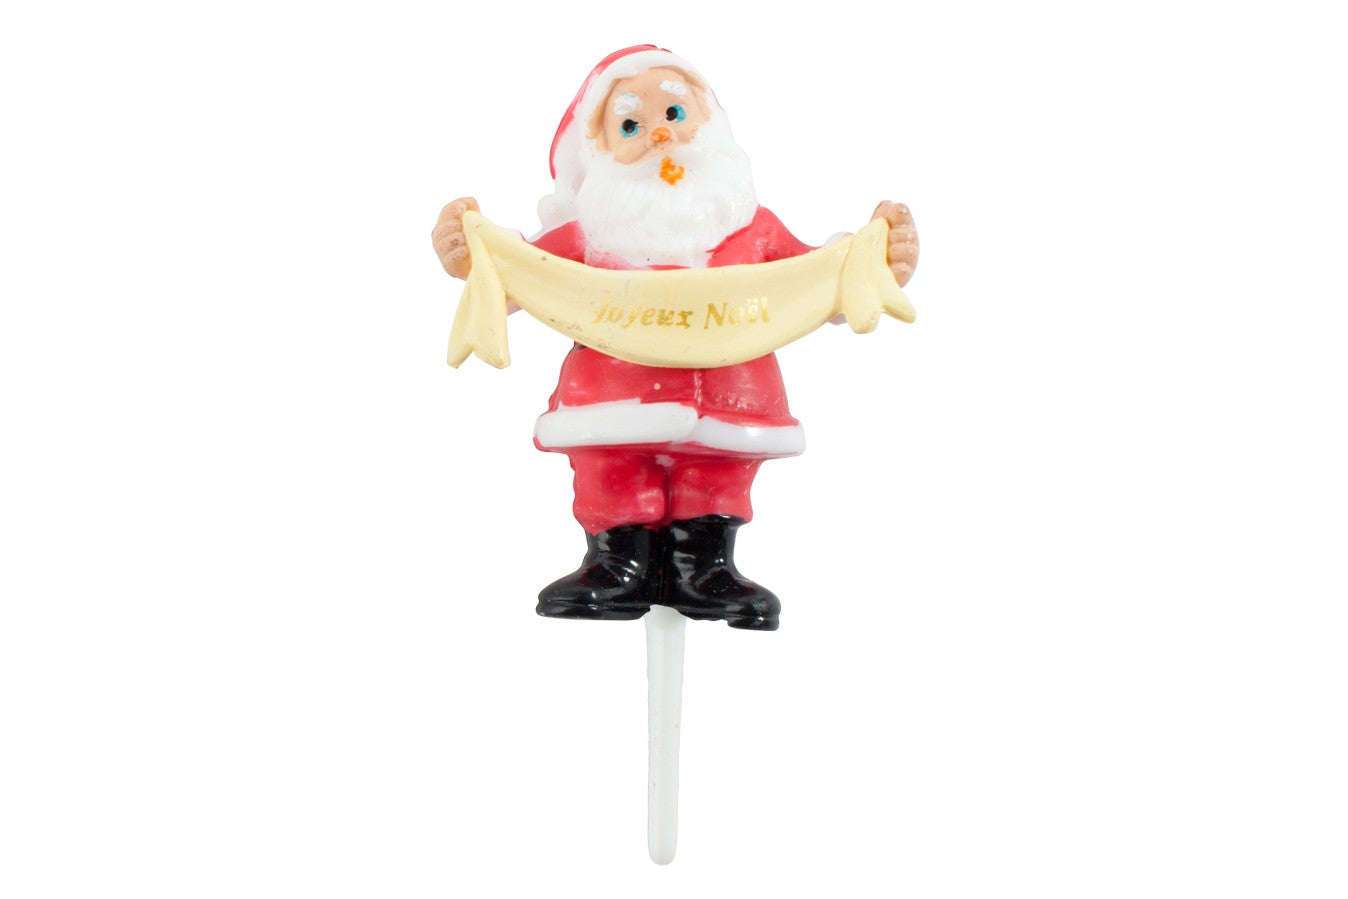 Joyeux Noel' Plastic Santa on Stick Father Christmas Cake Pick - The Cooks Cupboard Ltd